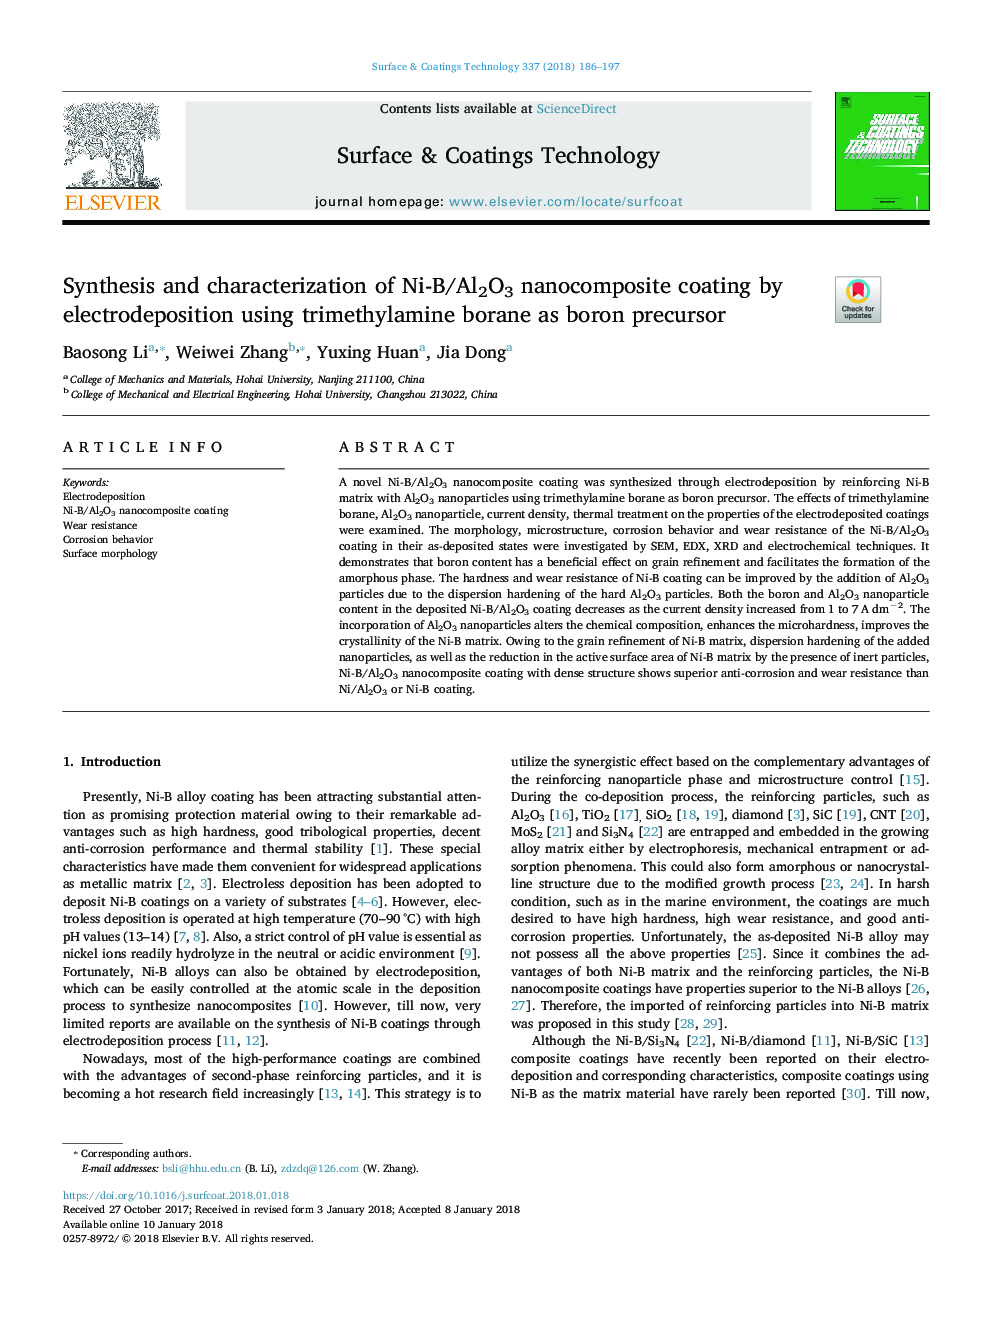 Synthesis and characterization of Ni-B/Al2O3 nanocomposite coating by electrodeposition using trimethylamine borane as boron precursor